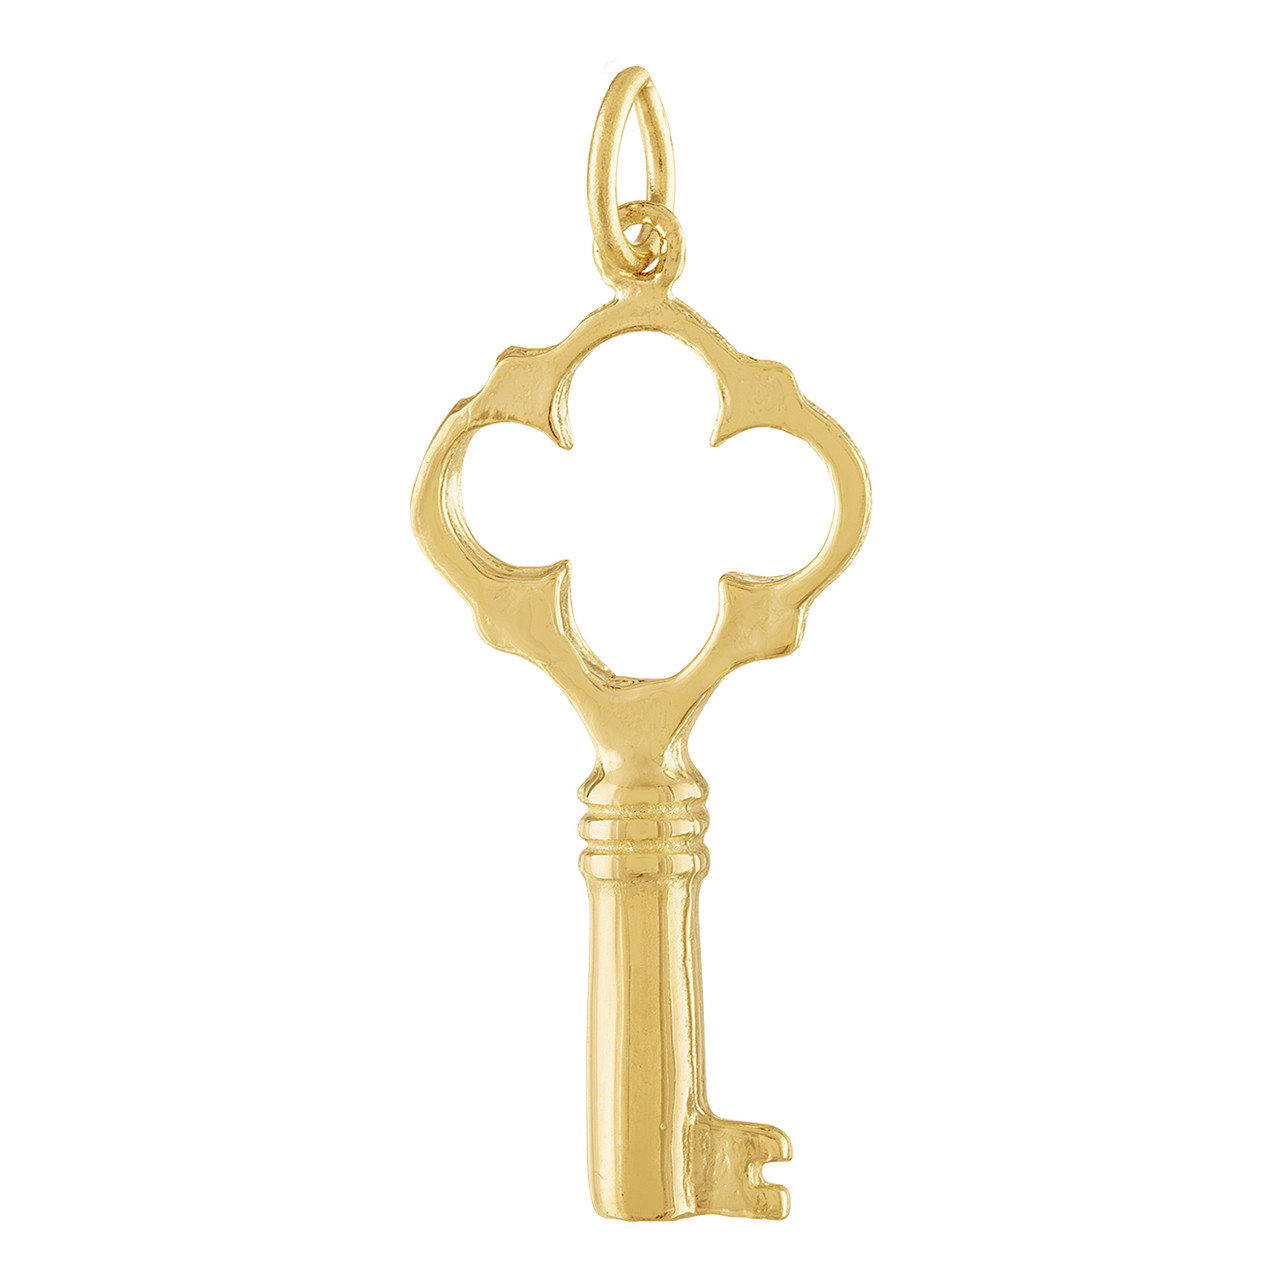 Quatrefoil Key 14K Gold Charm